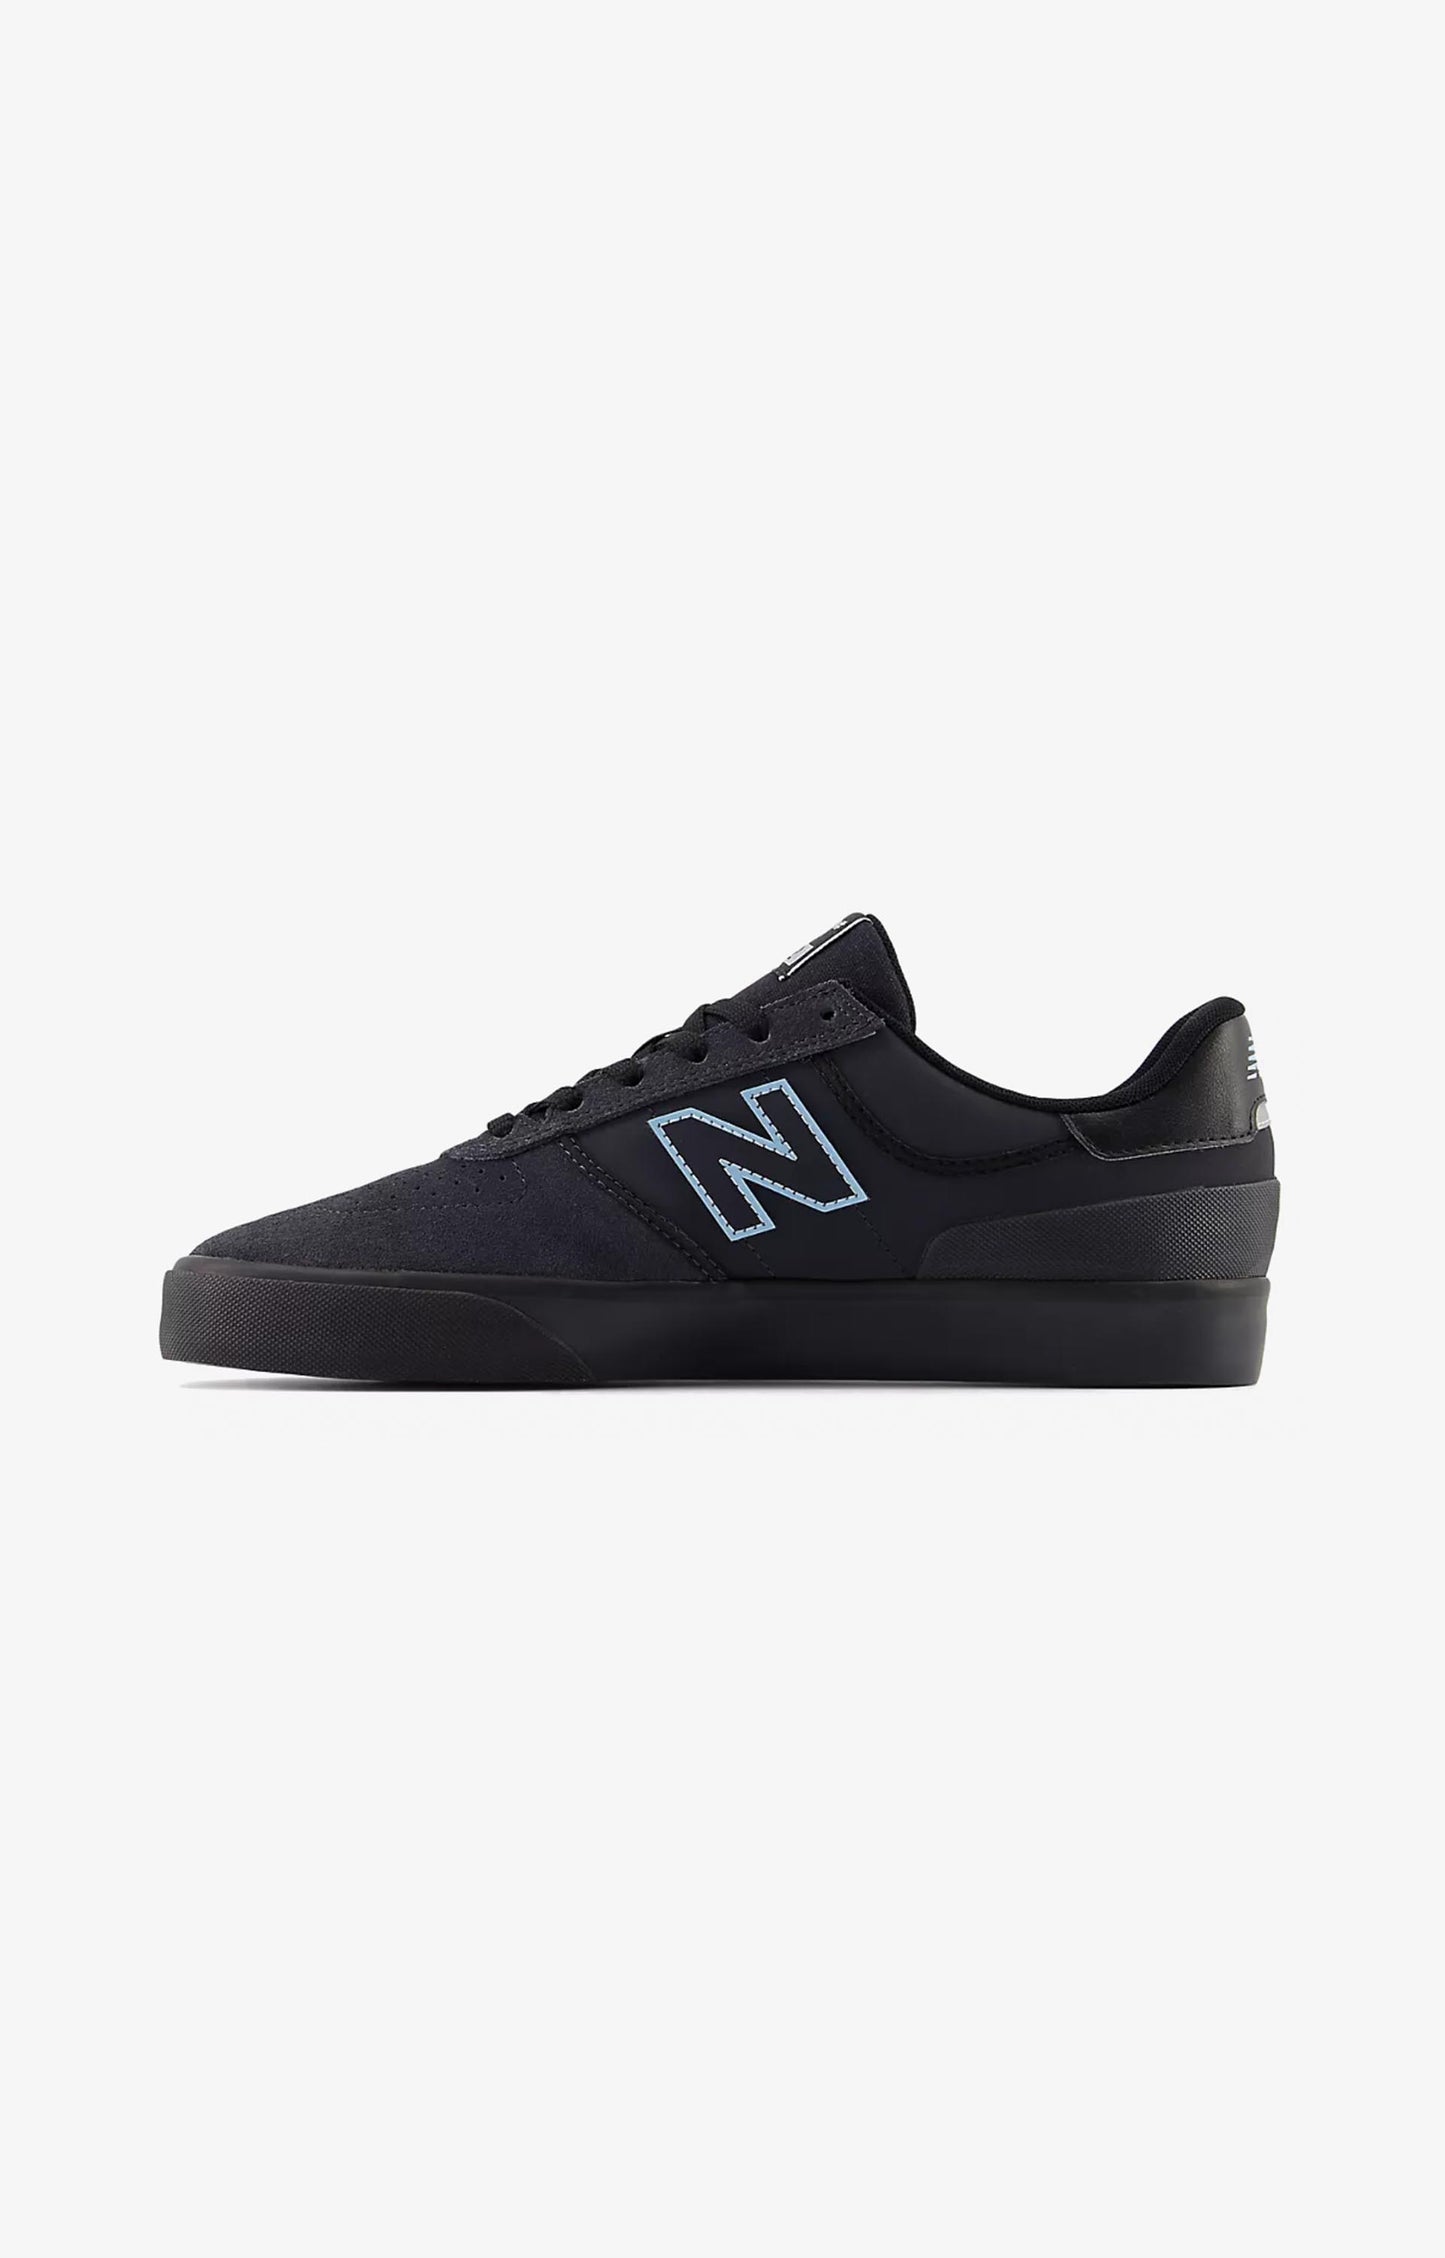 New Balance Numeric NM272GGB Shoe, Grey/Light Blue